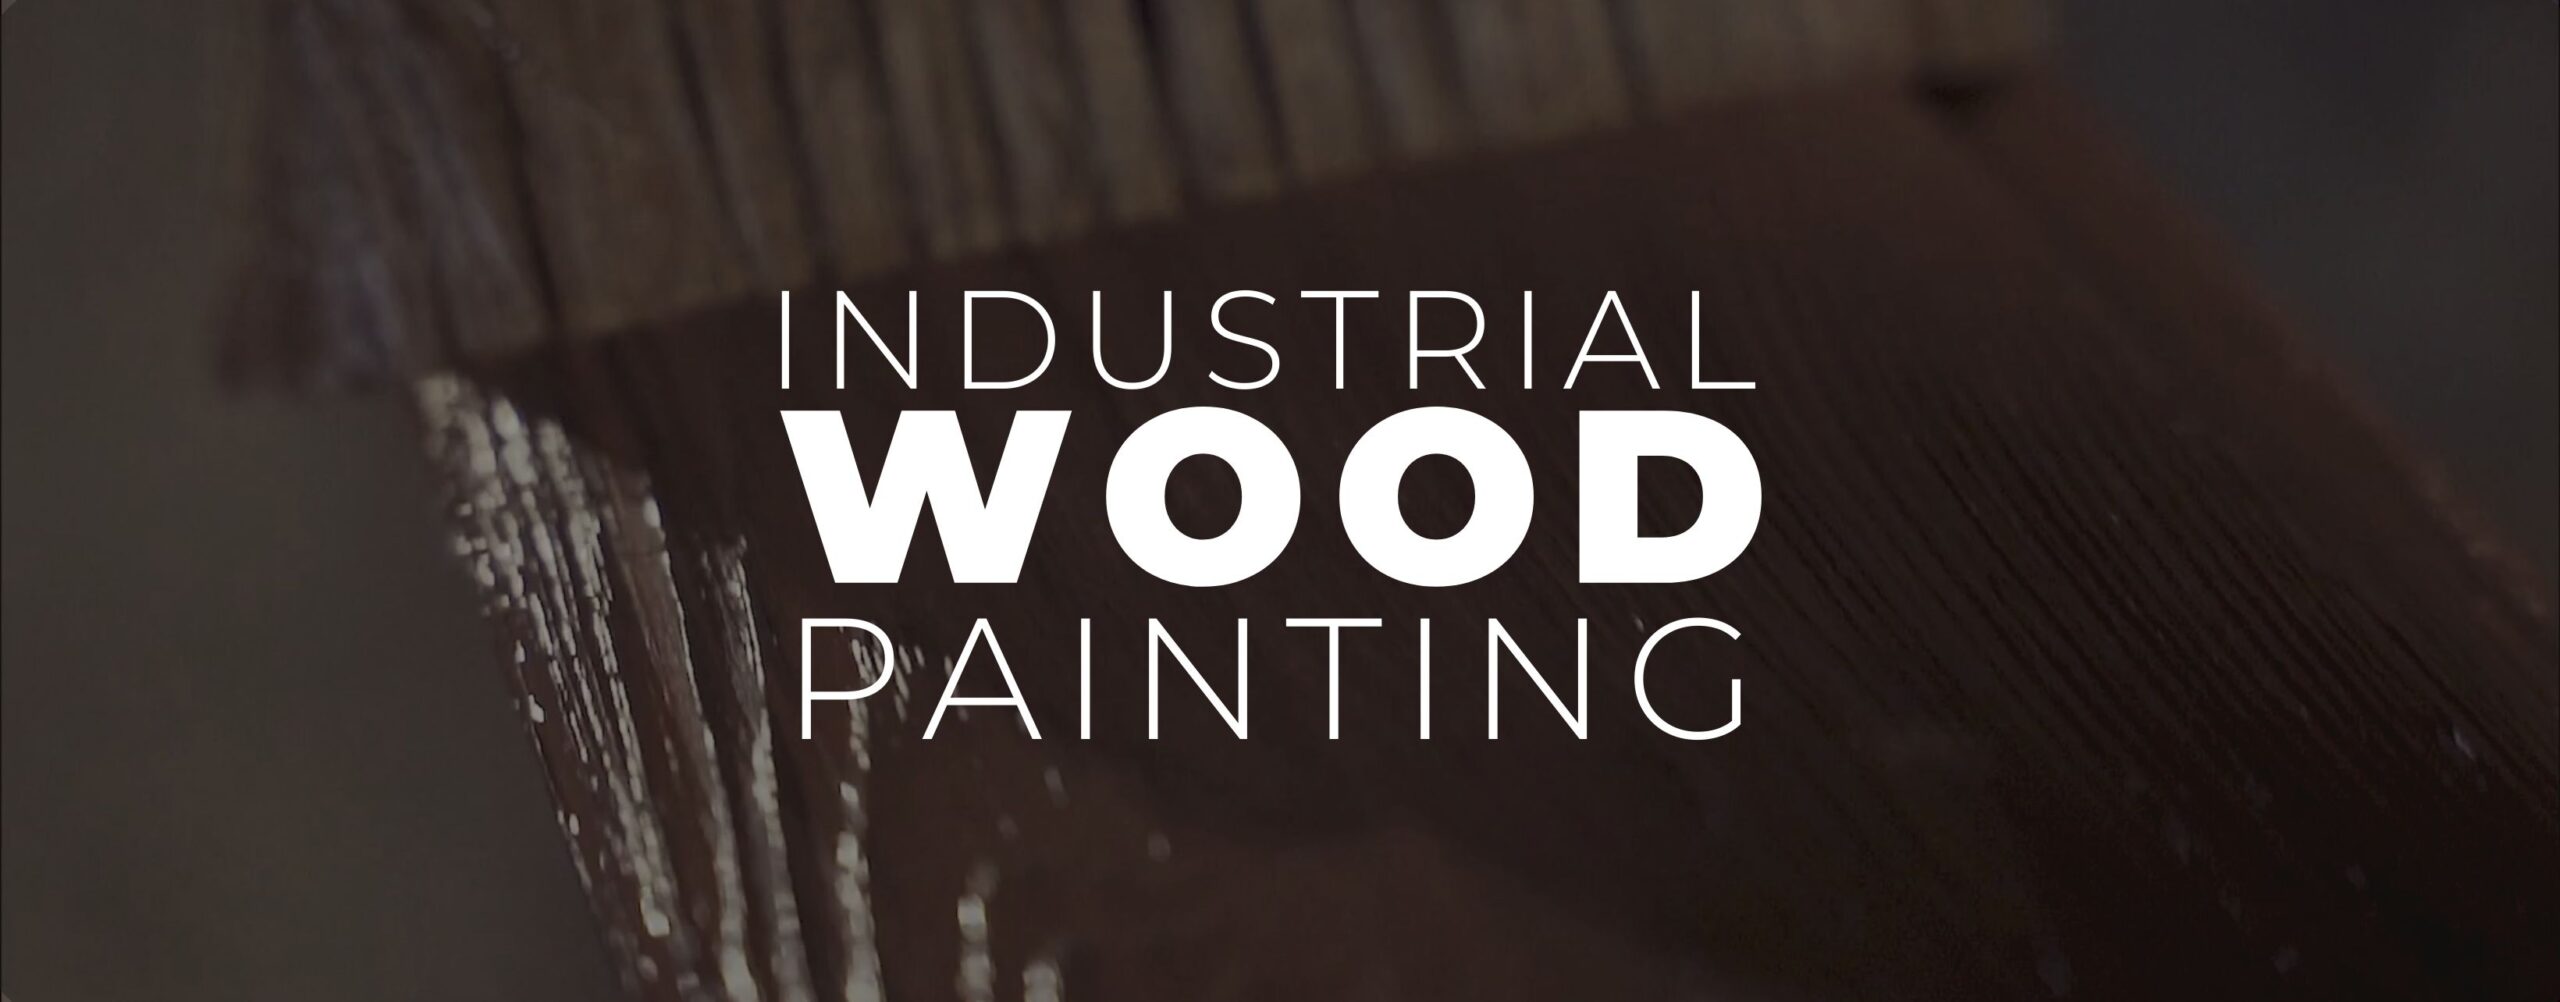 industrial wood painting